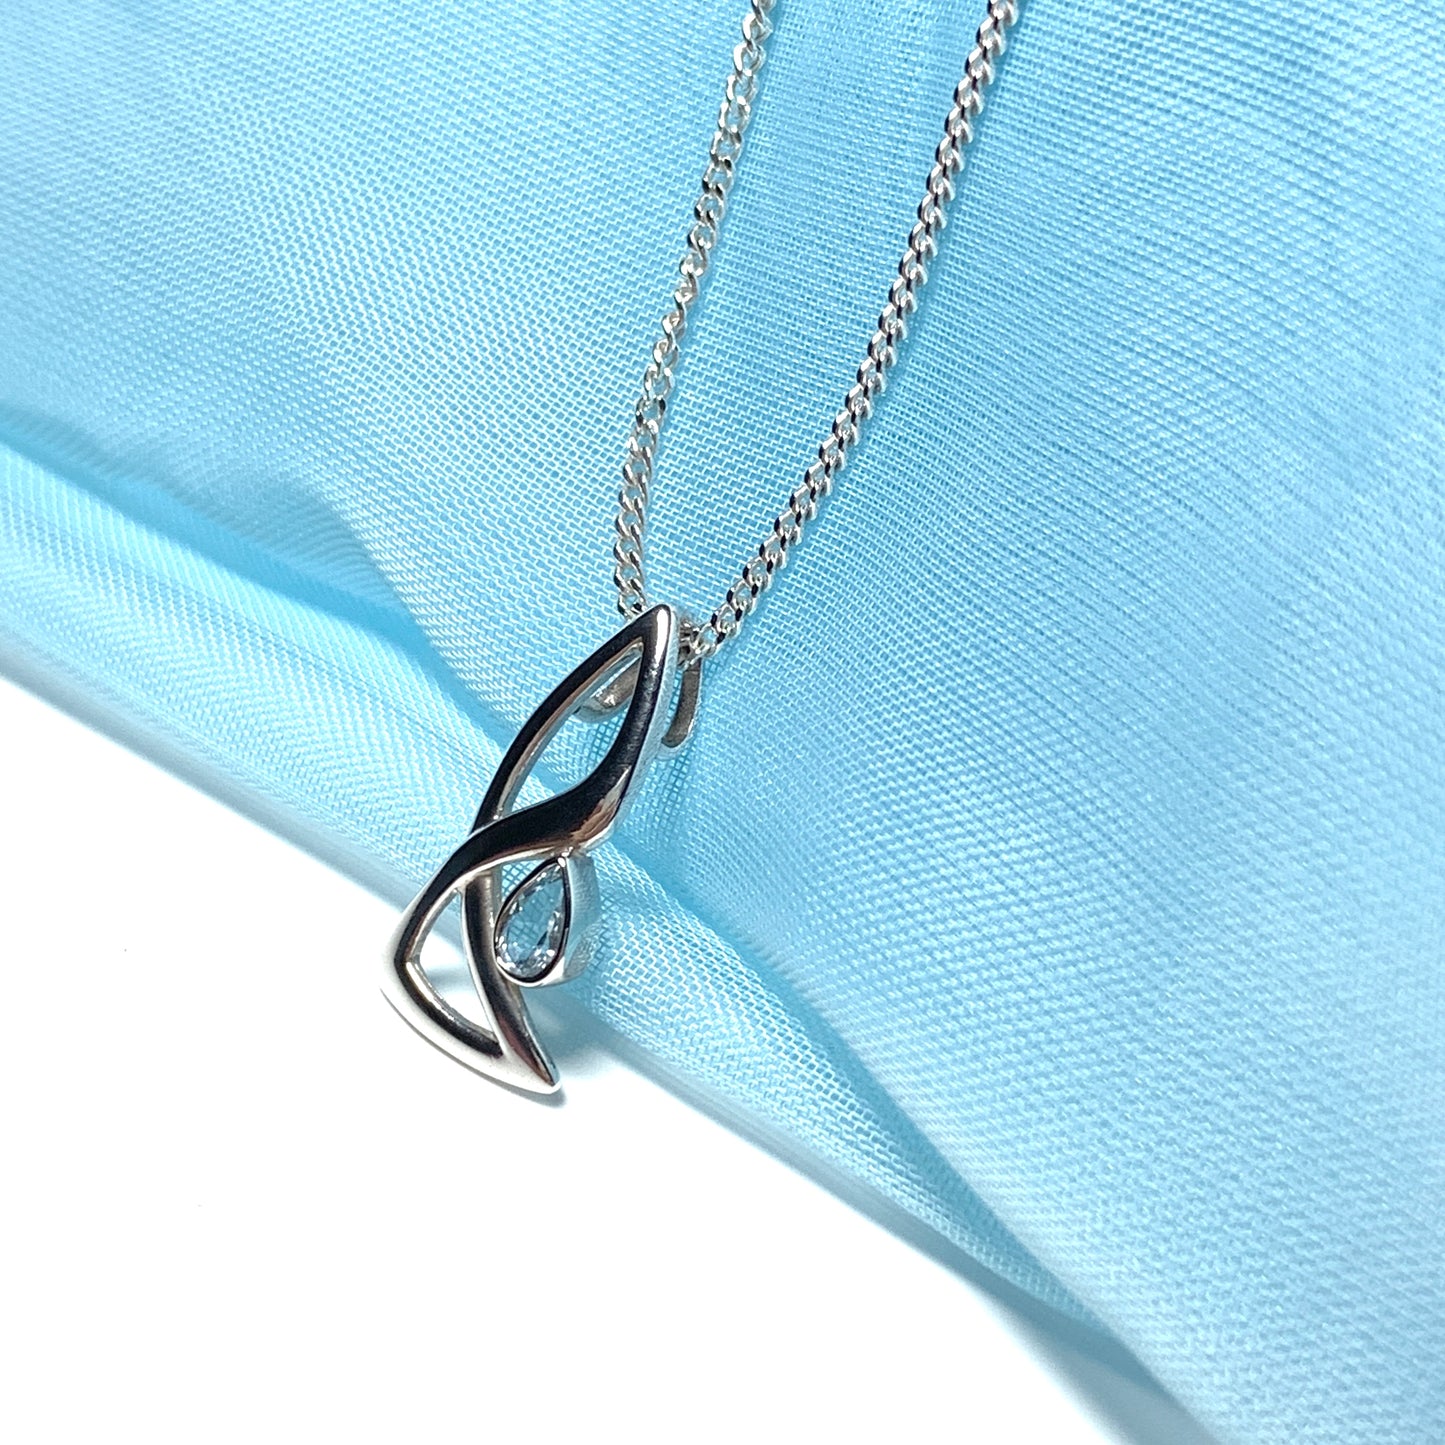 Blue Topaz fancy necklace sterling silver pear shaped pendant